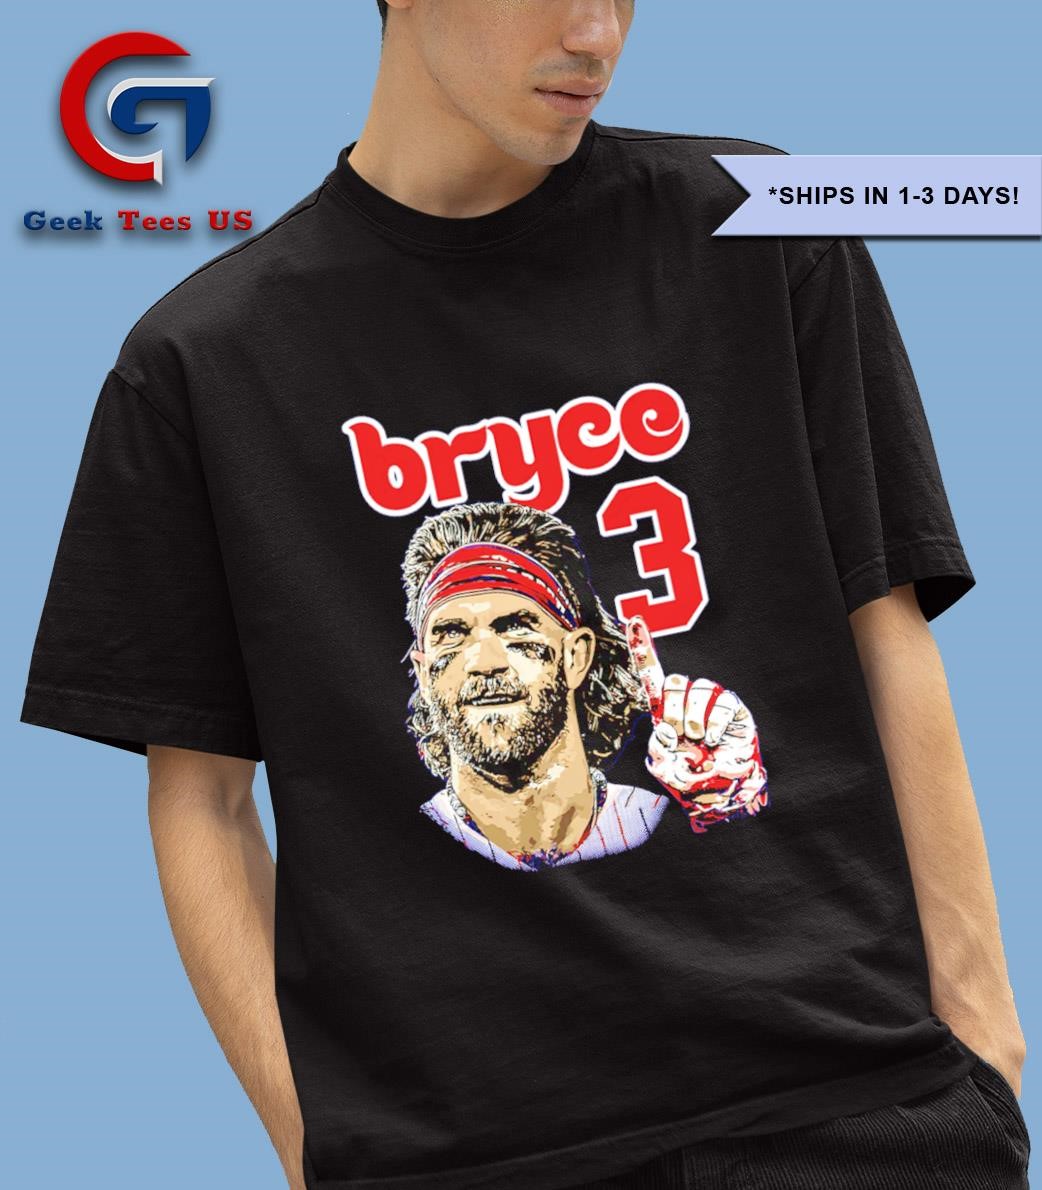 What’s up Bryce Harper 3 Philadelphia Phillies Baseball portrait shirt
geekteesus.com/product/whats-…
#shirt #trending #gift #geekteesus #geekshirt #GEEKS #BryceHarper #PhiladelphiaPhillies #Baseball #RingTheBell #Phillies